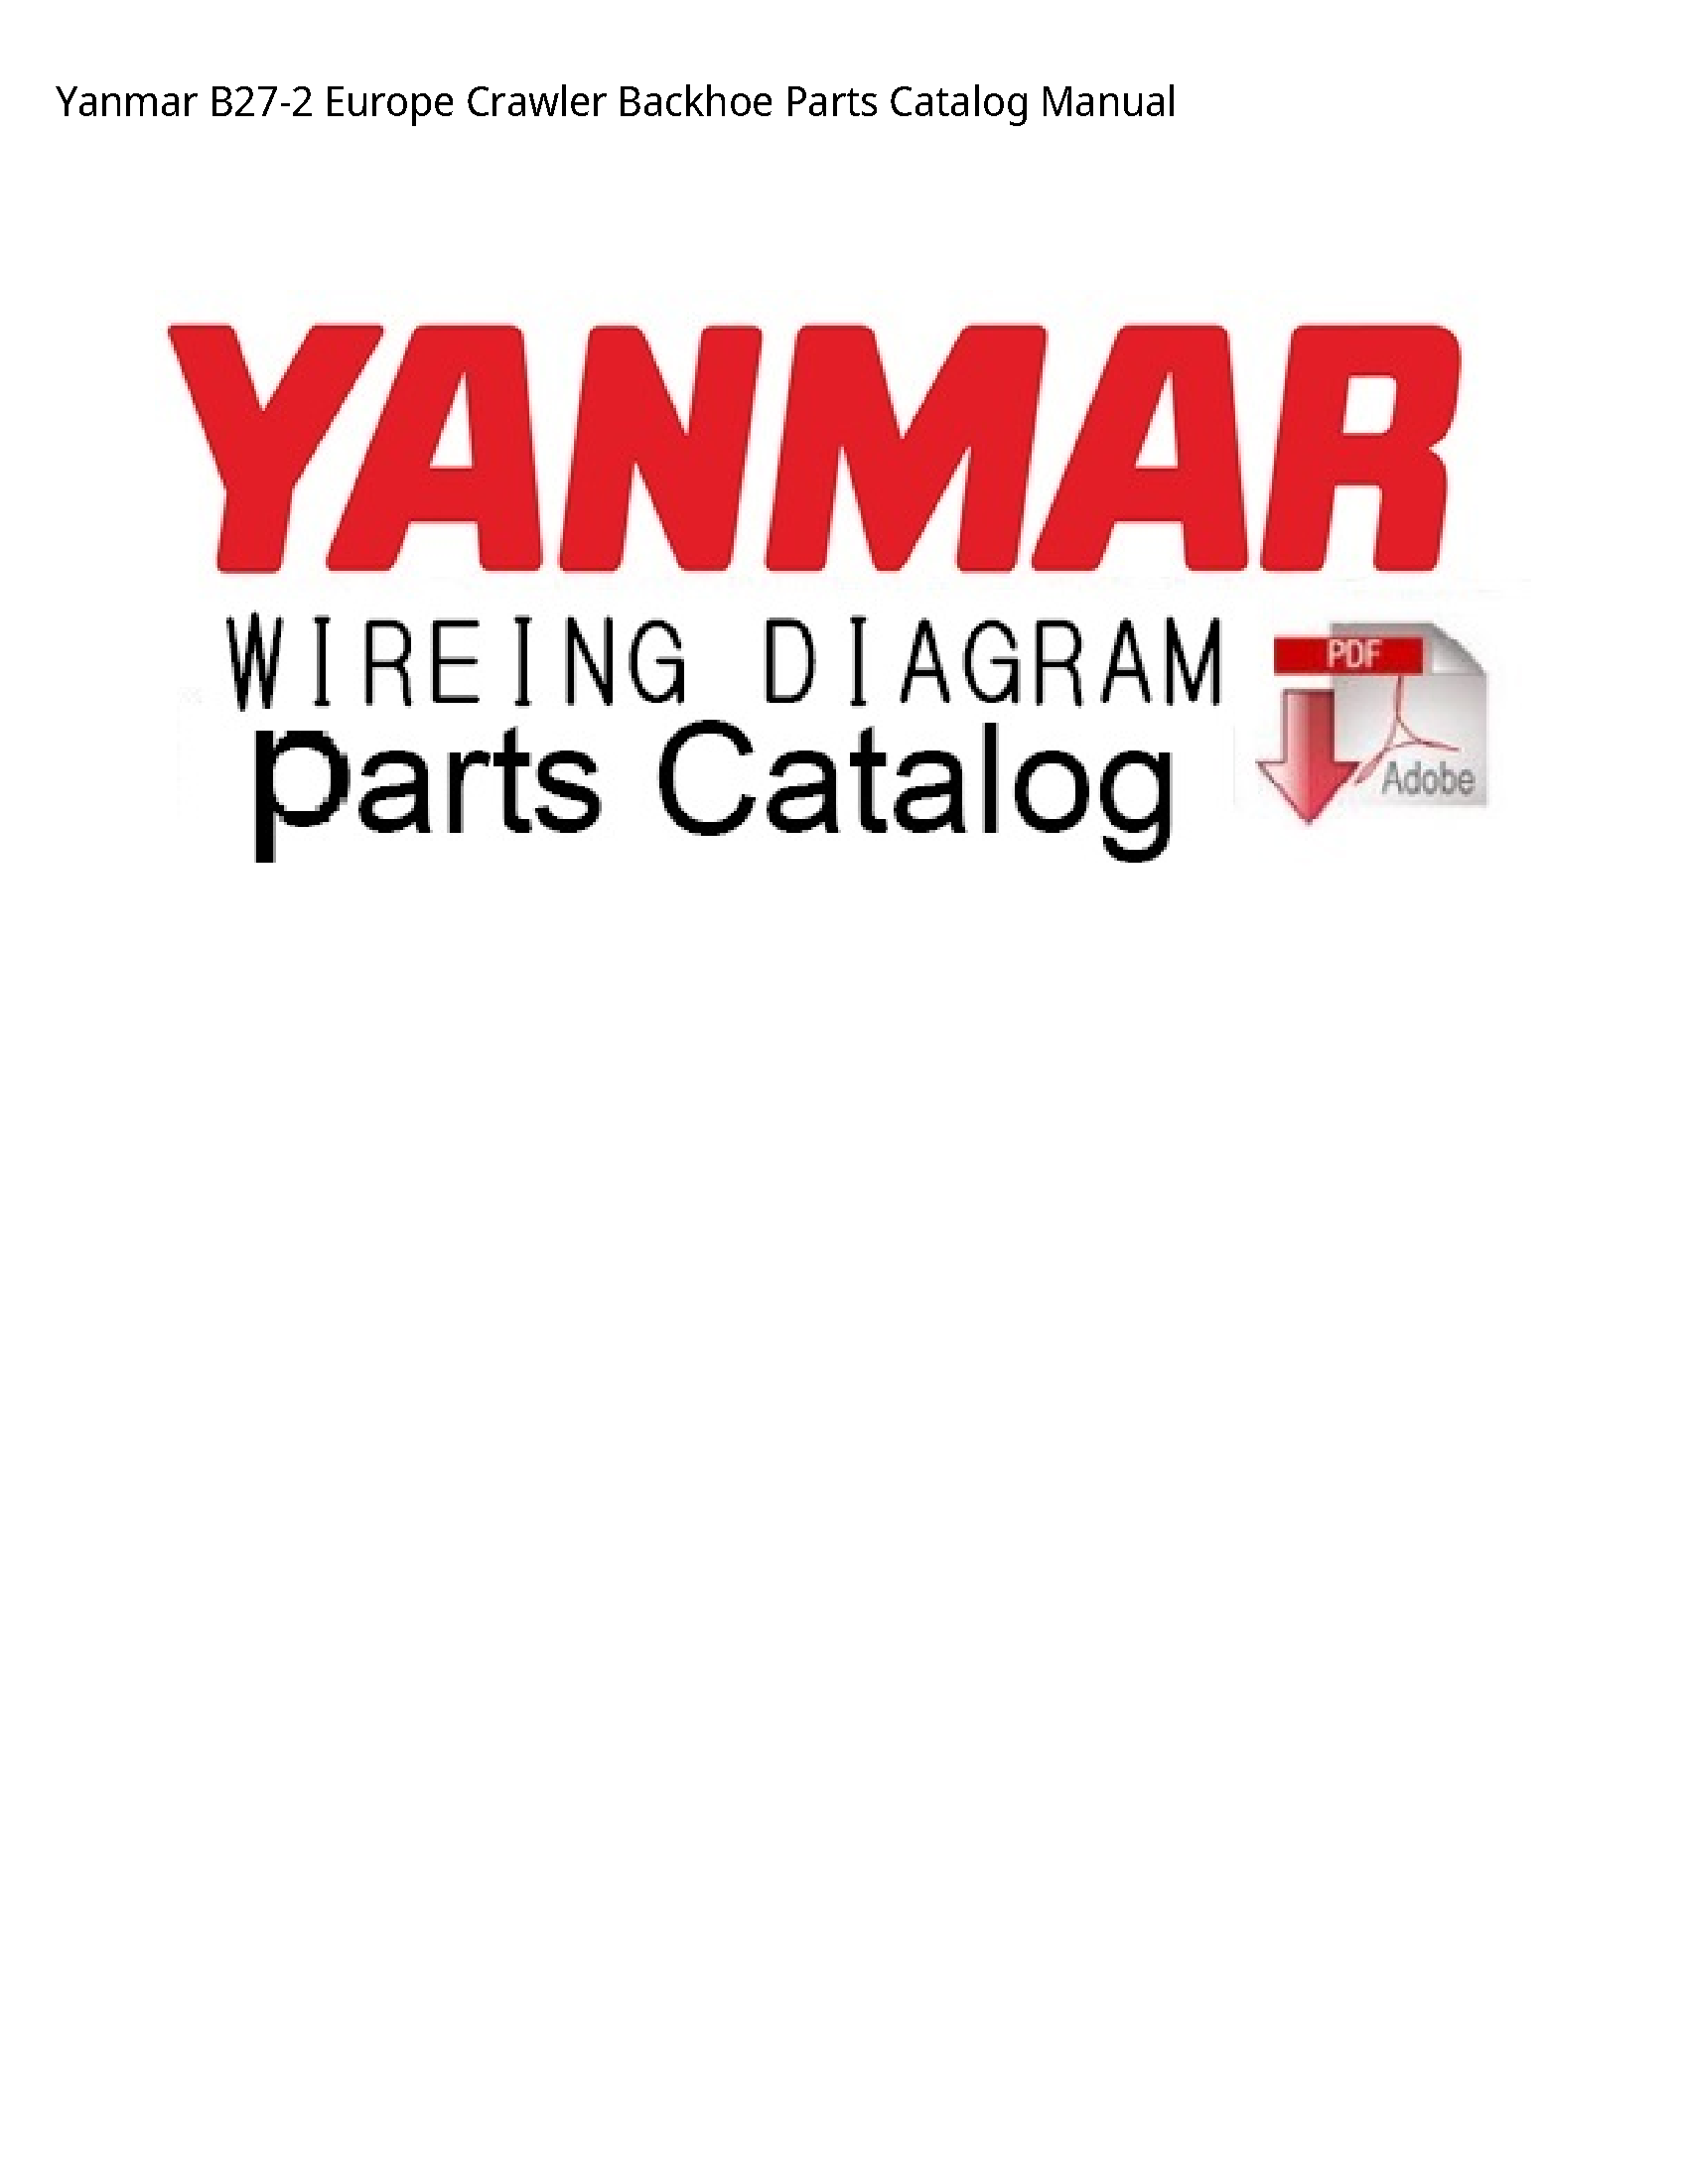 Yanmar B27-2 Europe Crawler Backhoe Parts Catalog manual